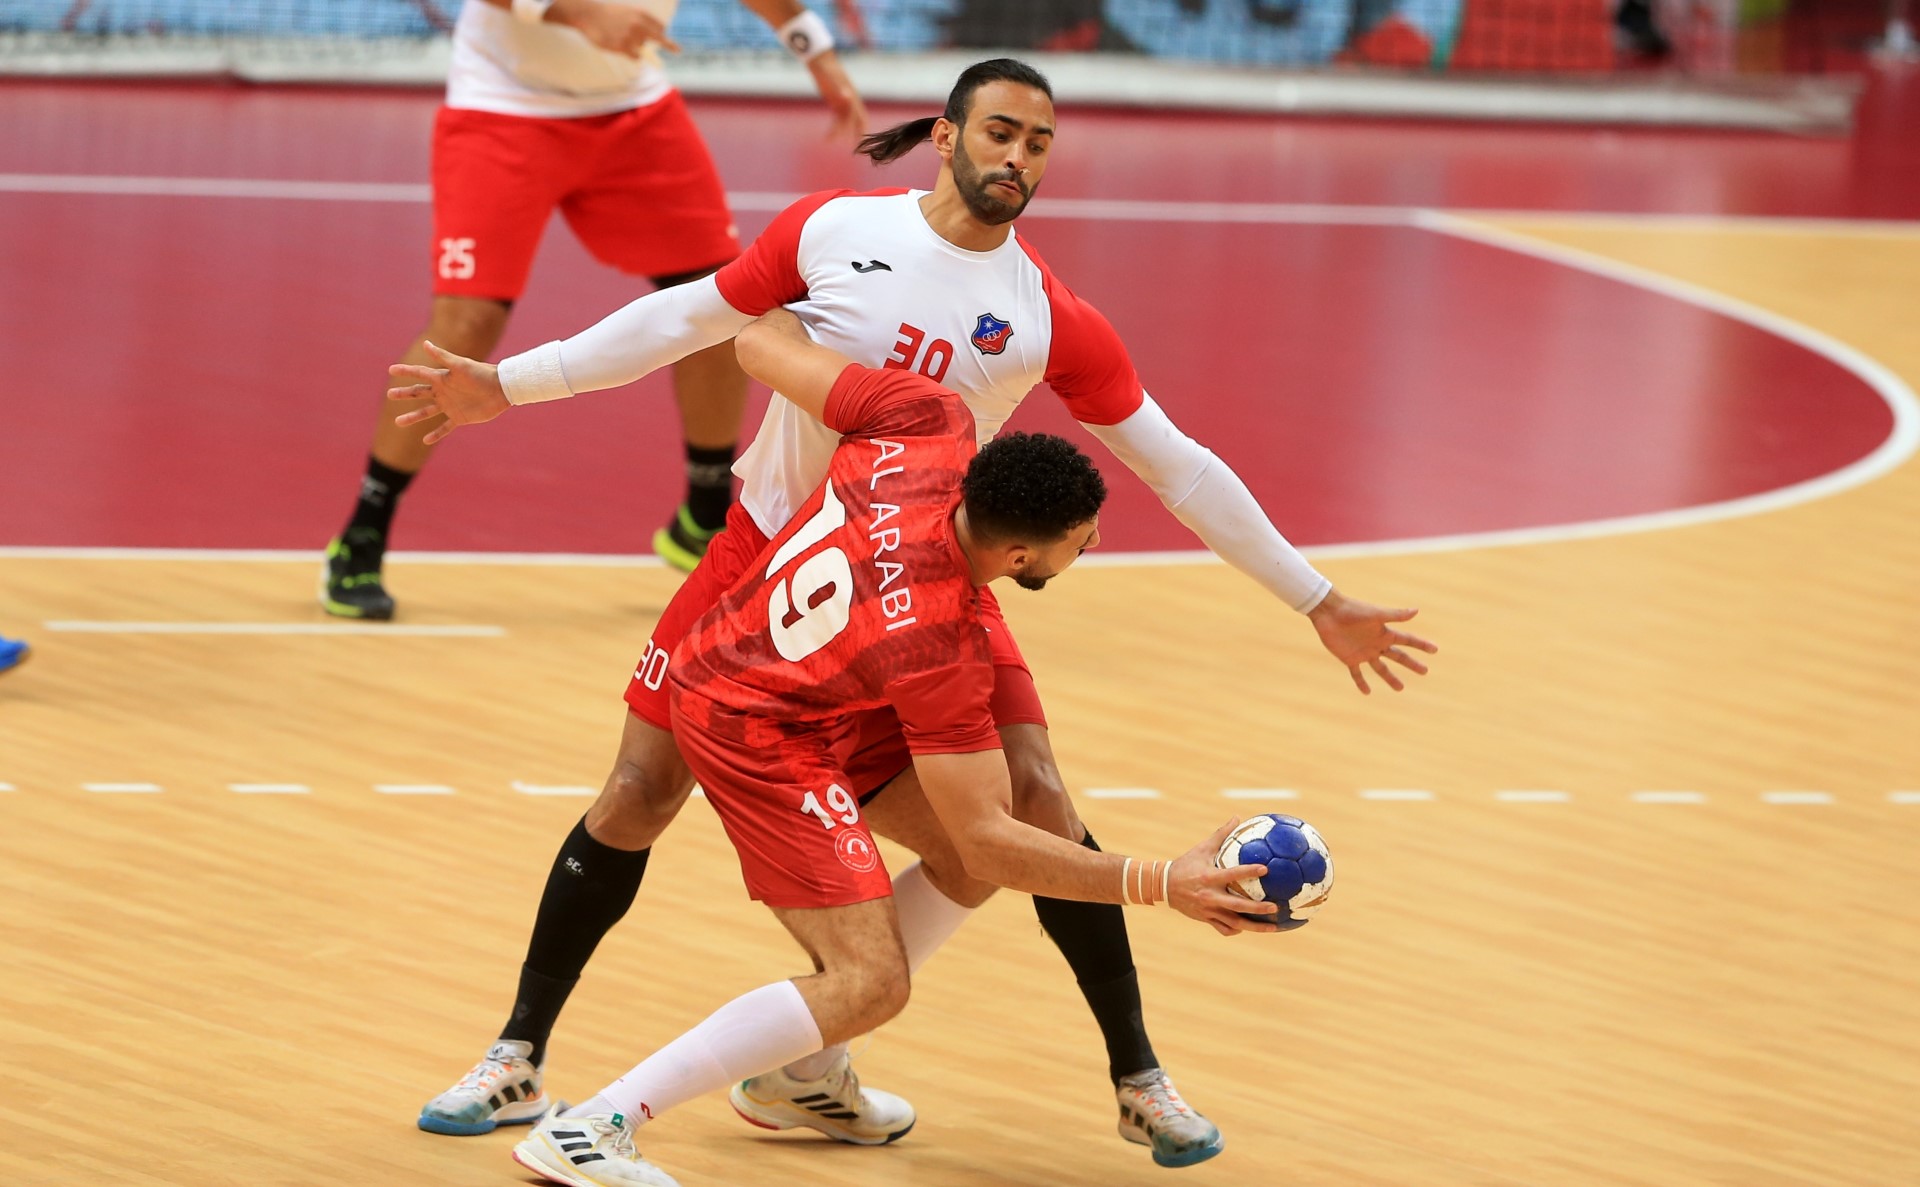 Kuwait SC team qualify to Gulf Handball Clubs Championship final in Qatar